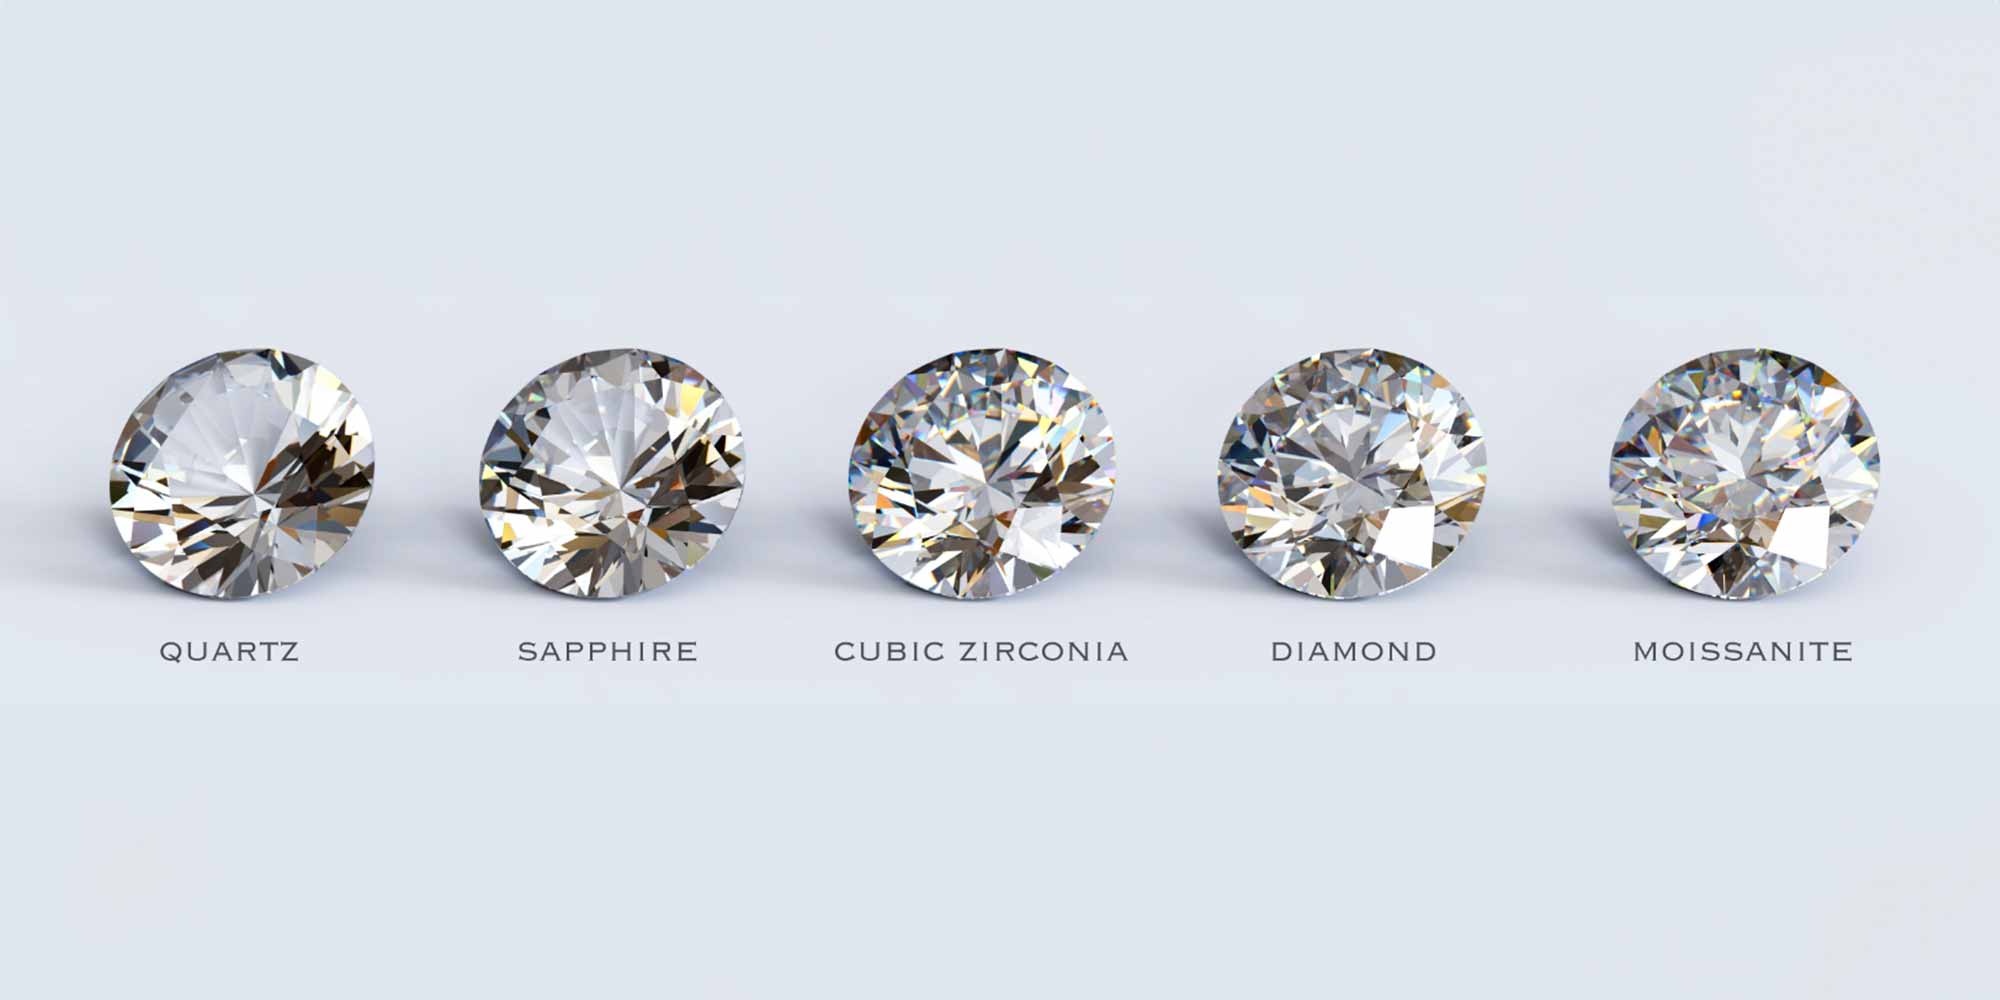 Kako izgleda Kvarc, Safir, Kubični Cirkonijum (CZ), Dijamant, Mojsanit? What does quartz, sapphire, cubic zirconia (CZ), diamond, moissanite, looks like?